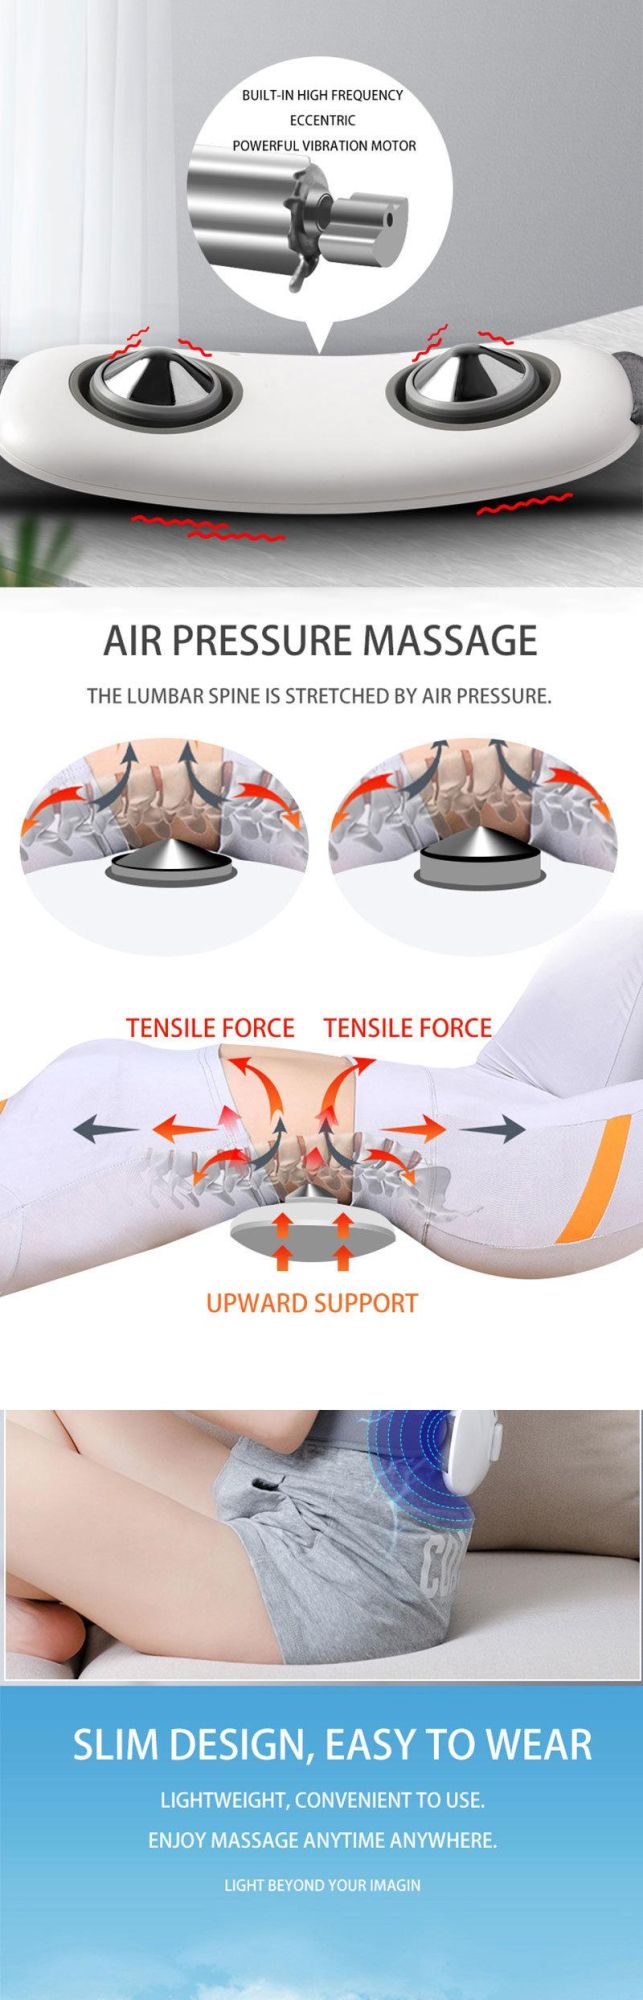 New Body Heating Application and Vibration Massage Device Type Waist Trimmer Belt Massager